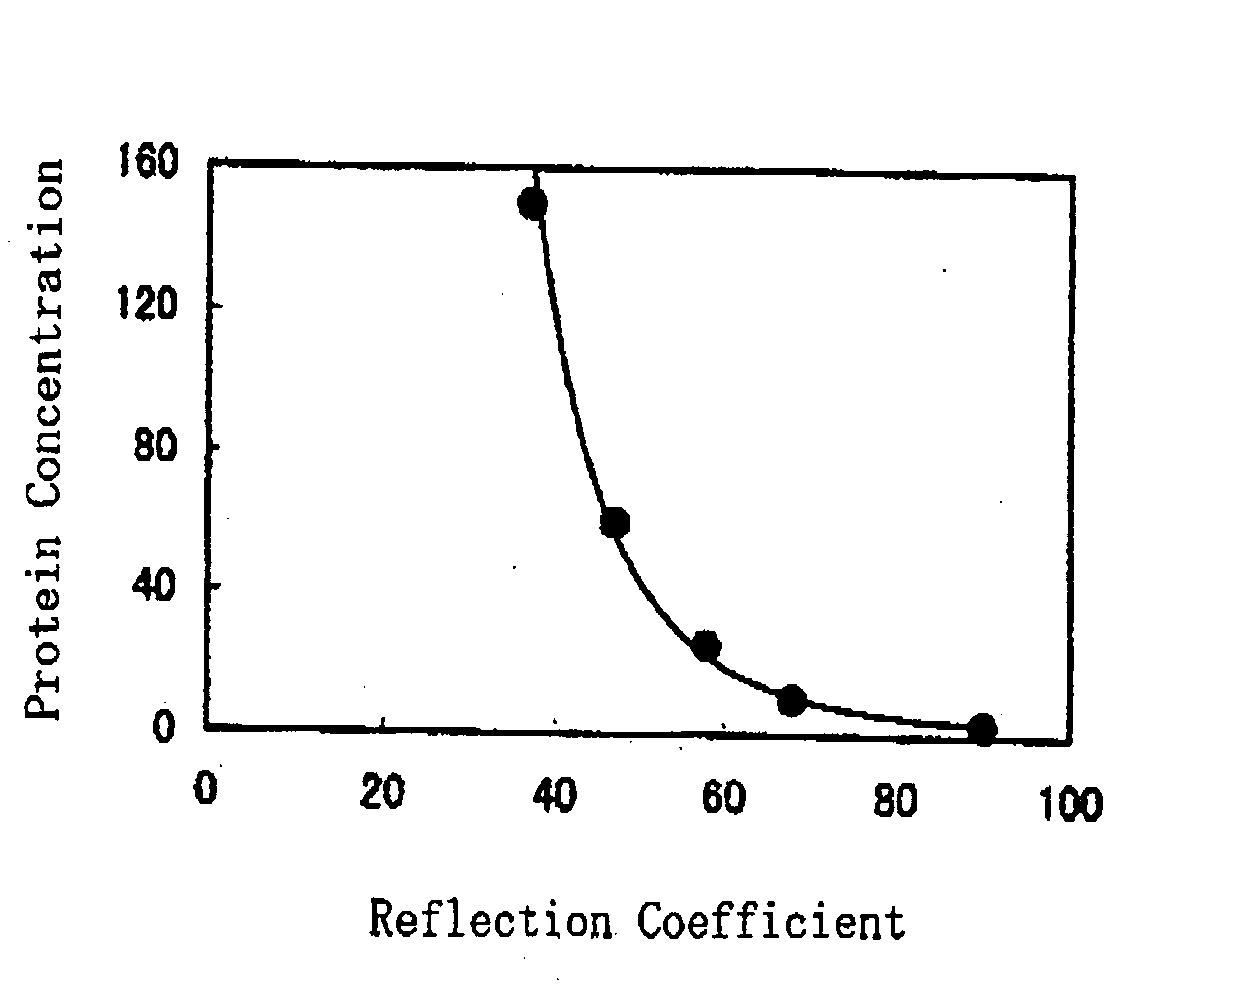 Method of Protein Measurement